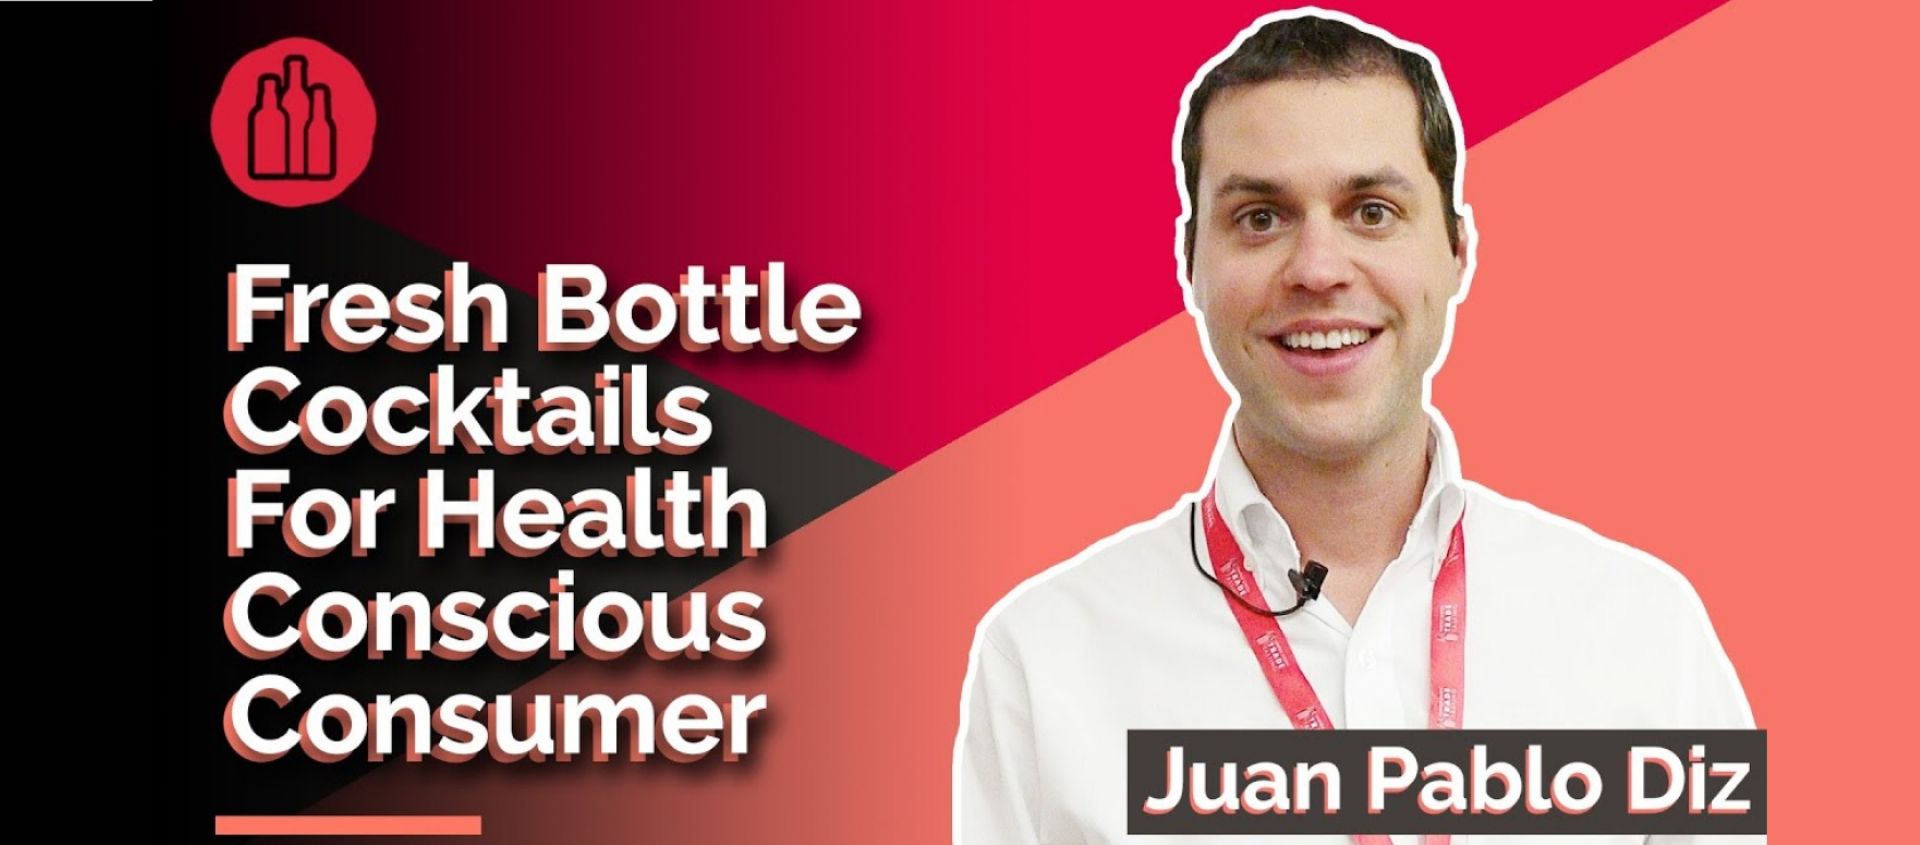 Photo for: Juan Pablo Diz on Fresh Bottle Cocktails For Health Conscious Consumers.